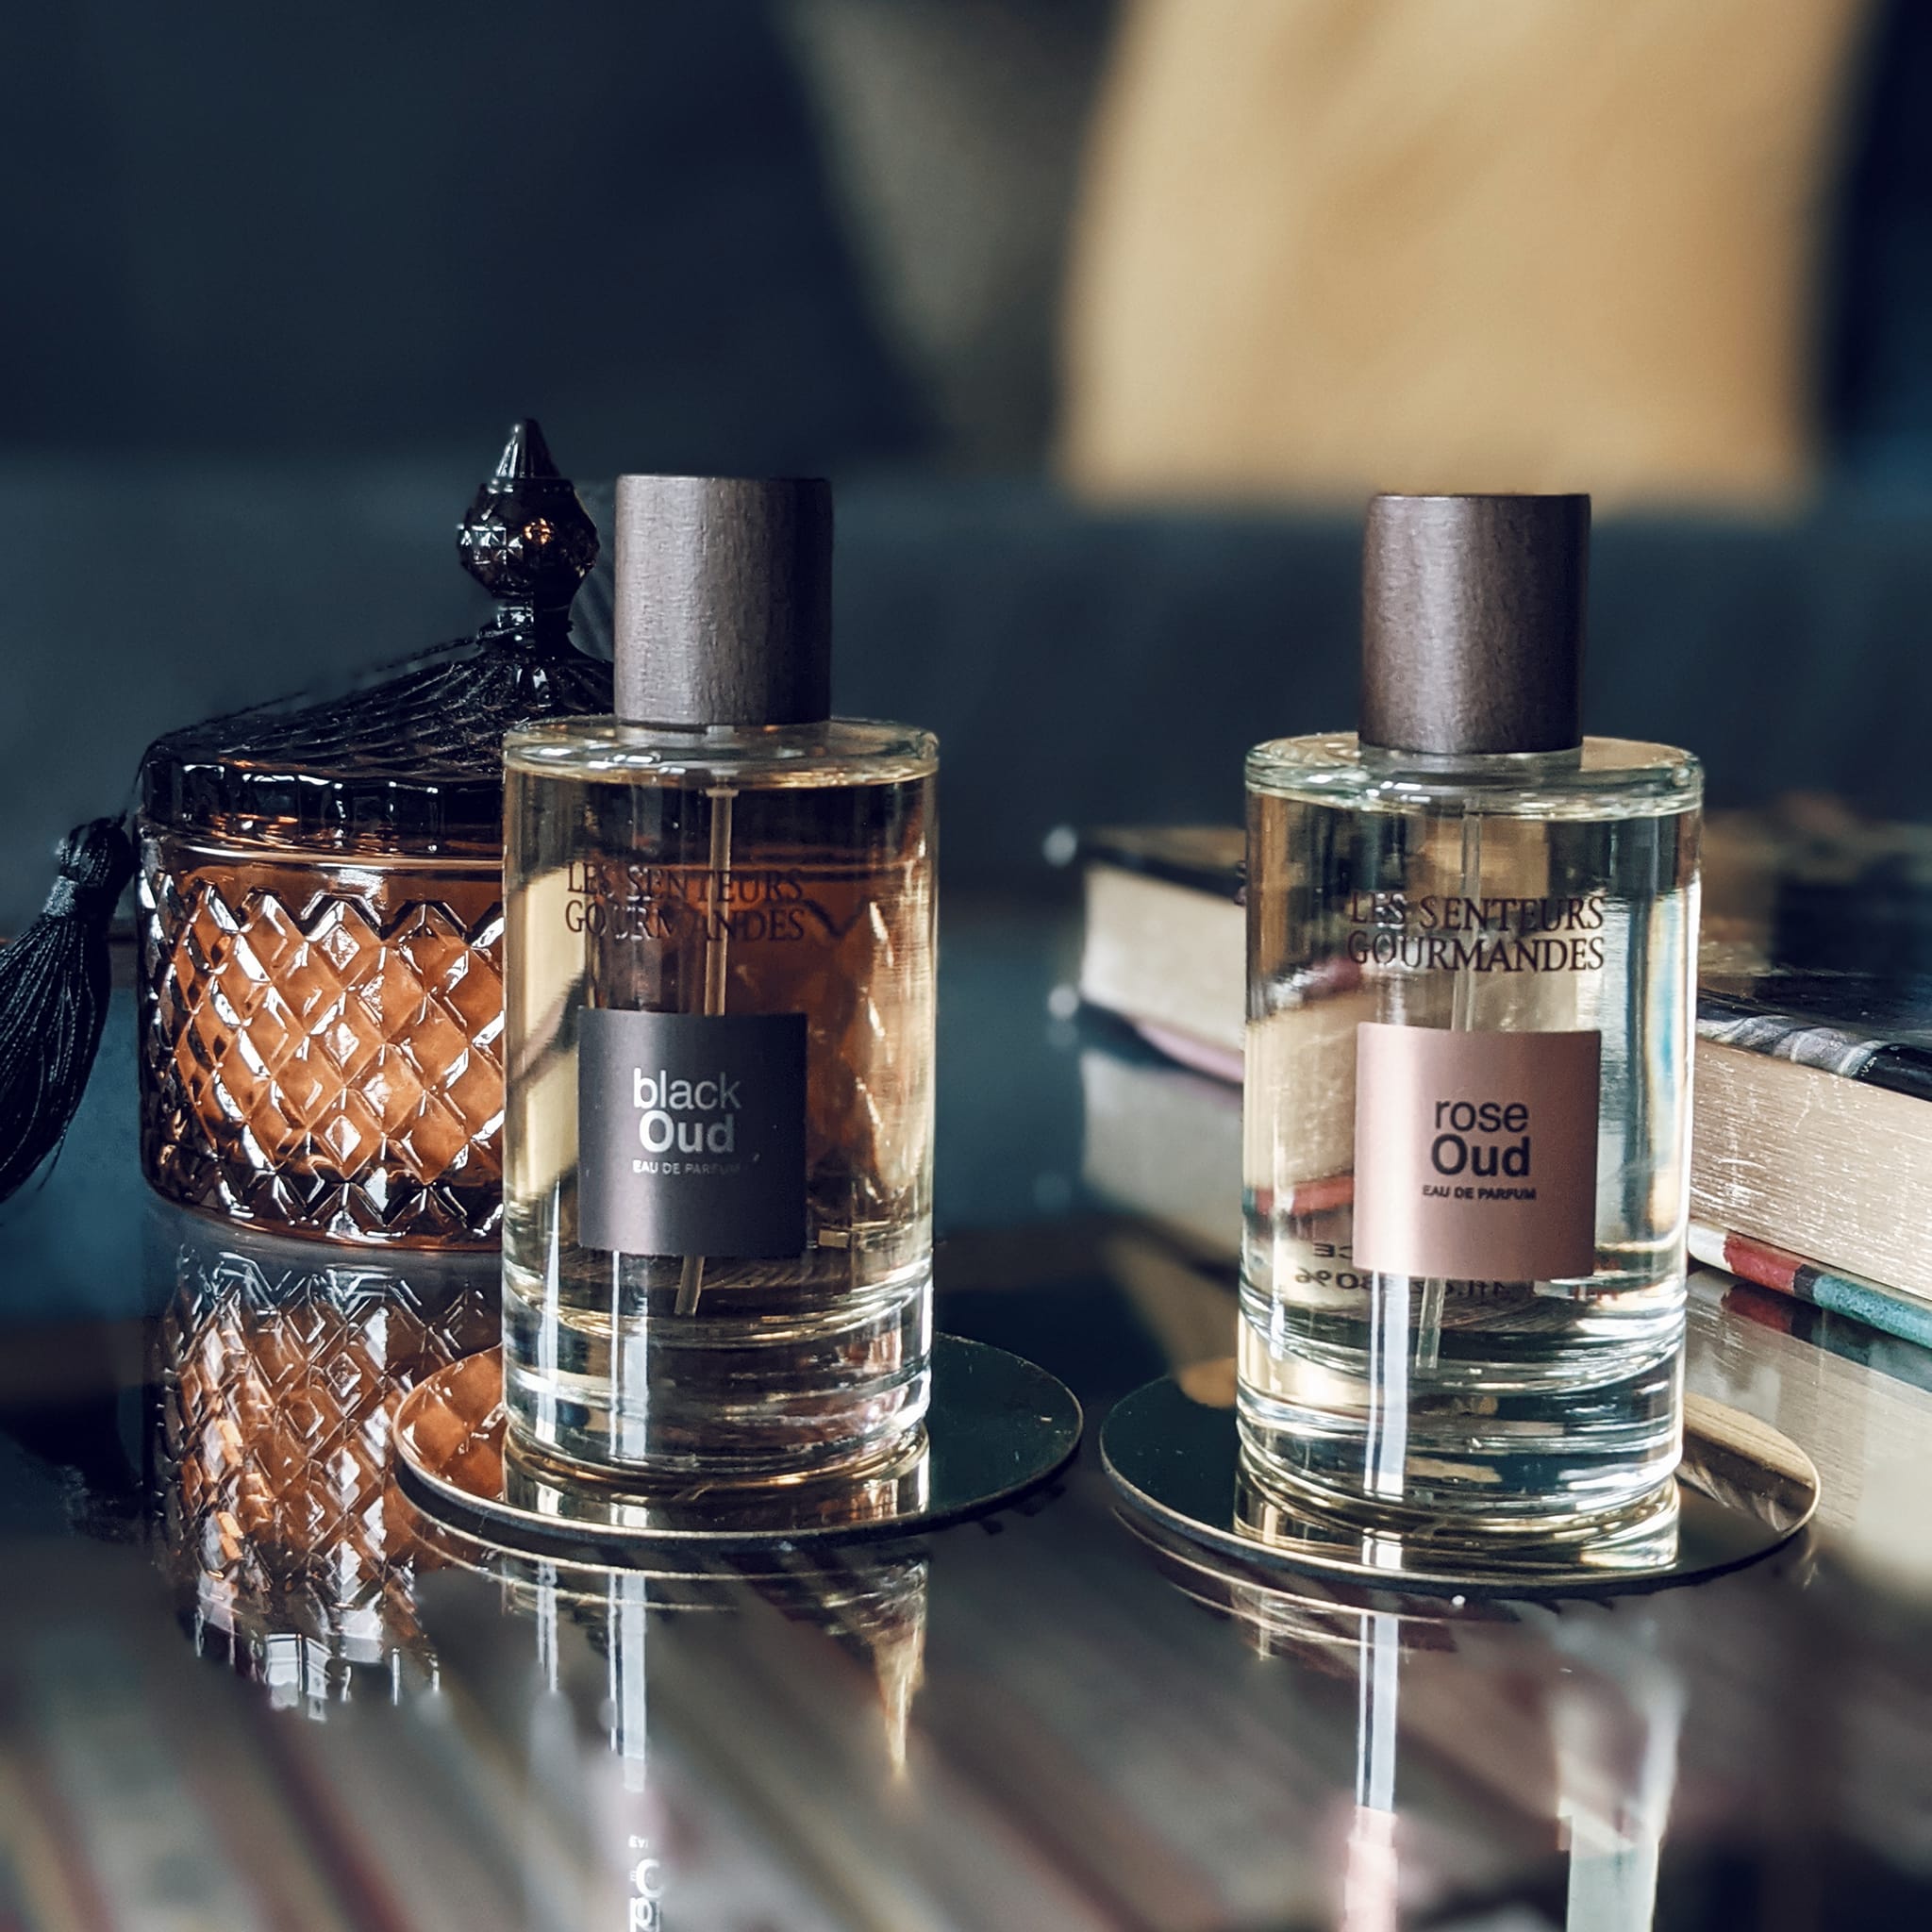 Rose Oud Les Senteurs Gourmandes perfume - a fragrance for women